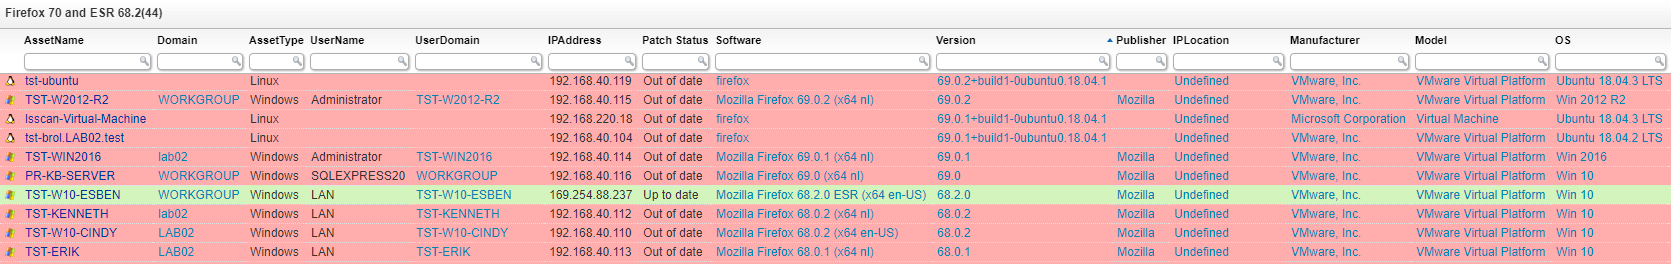 Firefox 70 and ESR 68.2 Audit